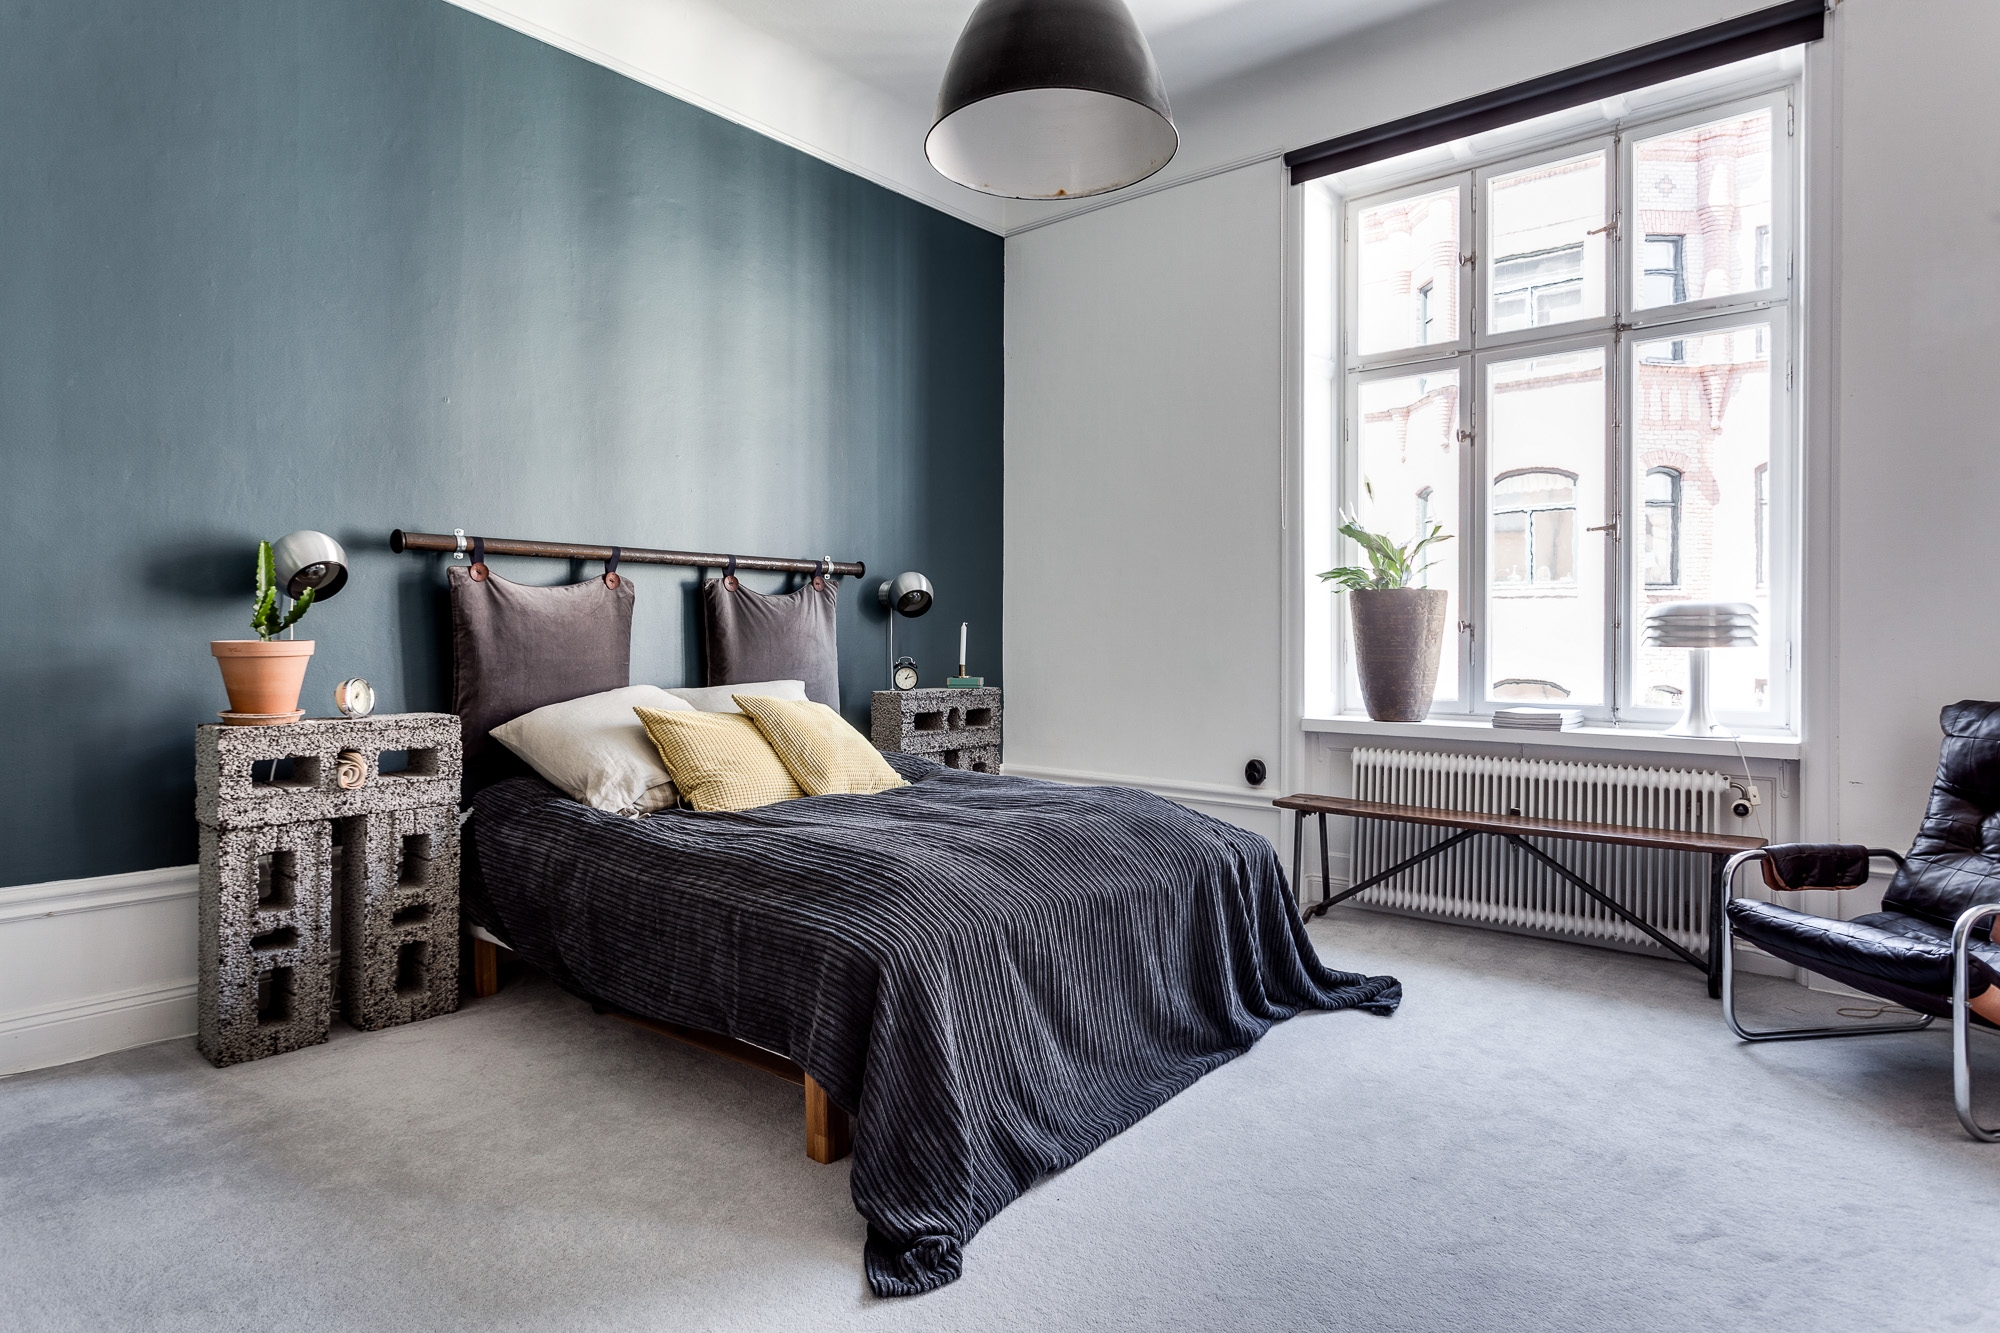 In vintage slaapkamer vind je hele leuke en inspirerende decoratie ideeën -